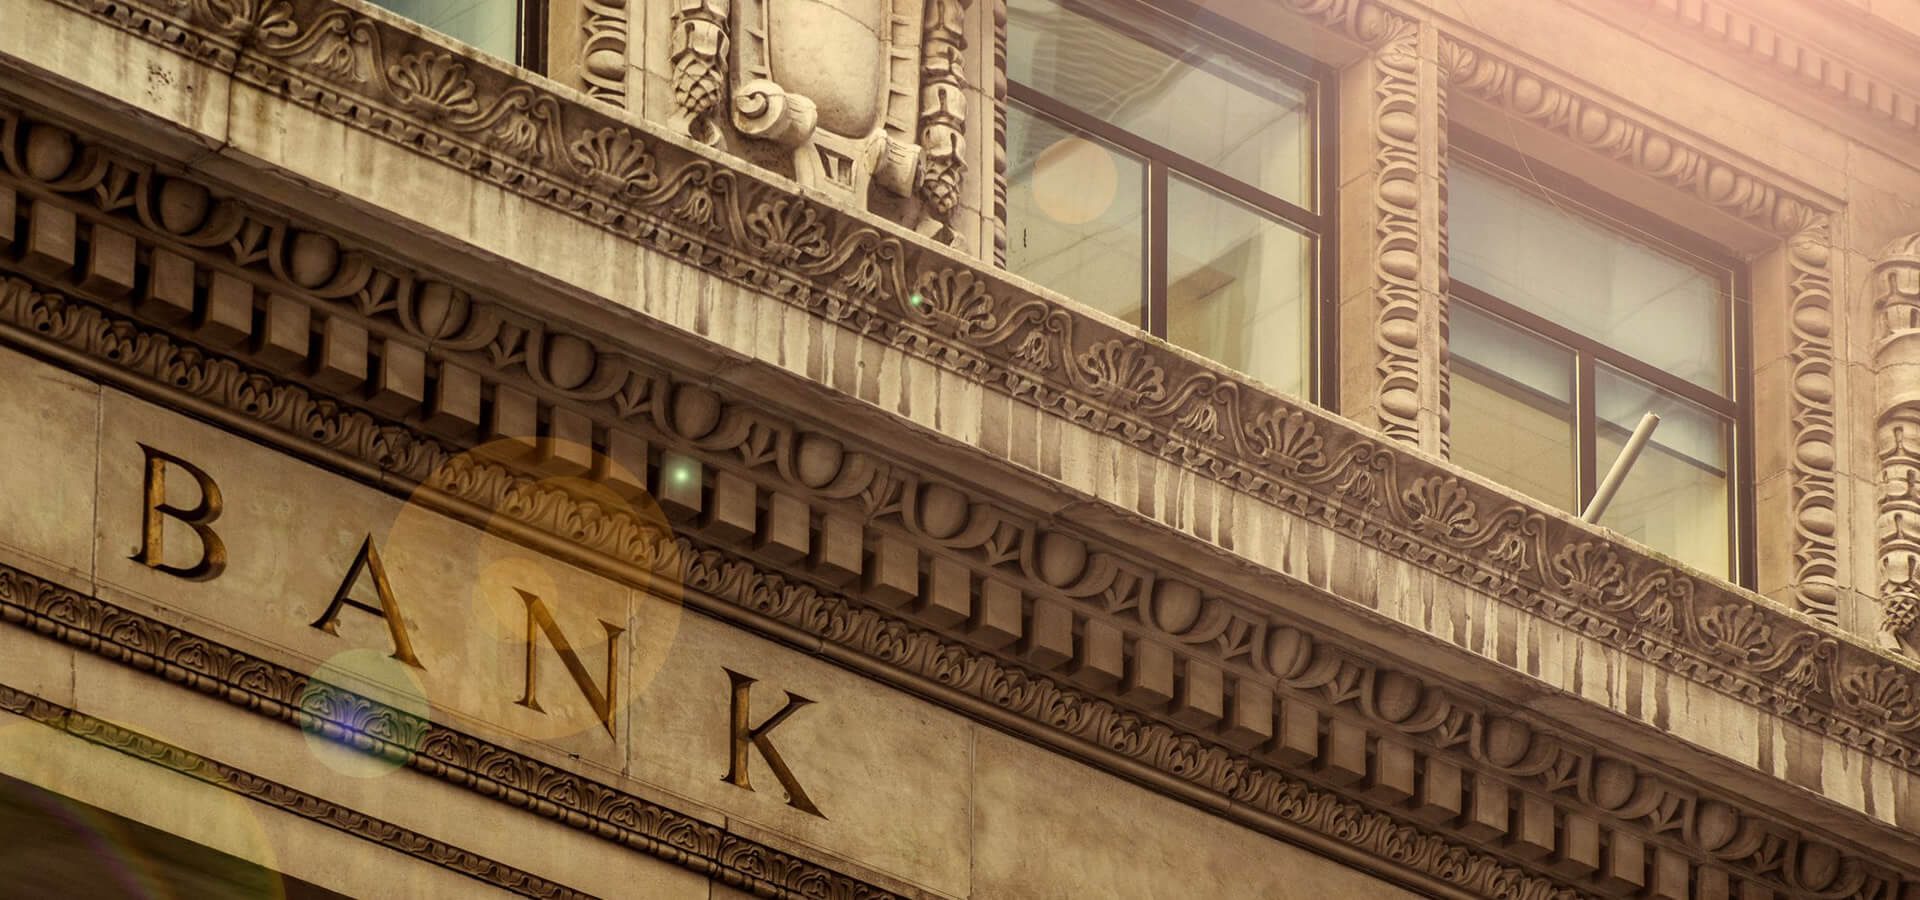 The 3 determinants of reputational risk for banks